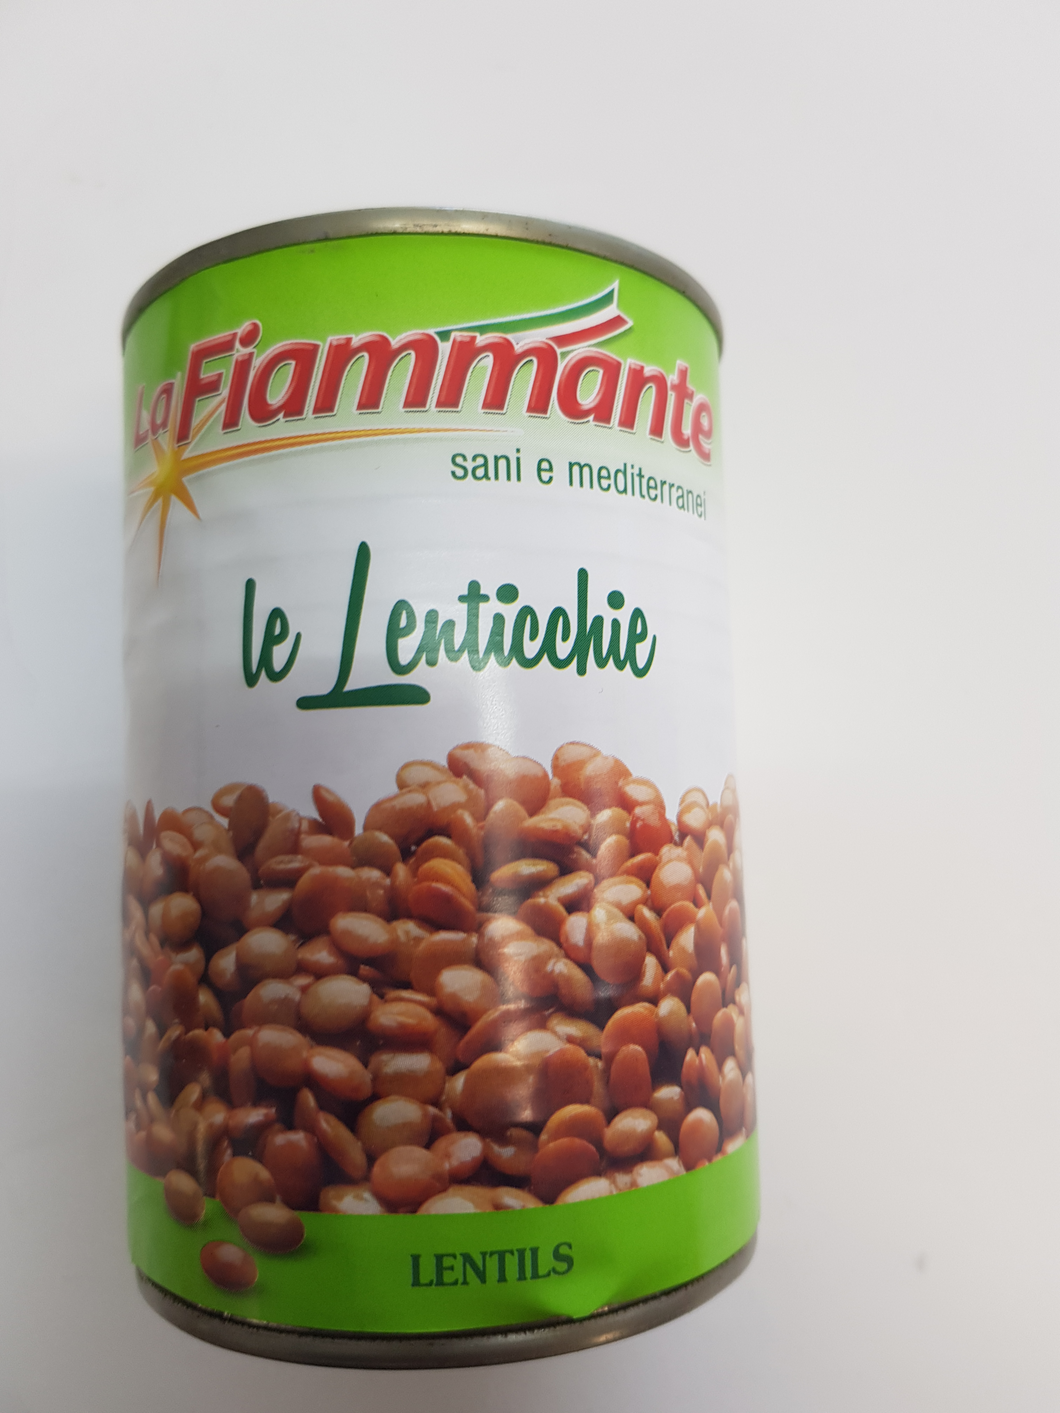 Fiammante - Lenticchie ( Lentils)